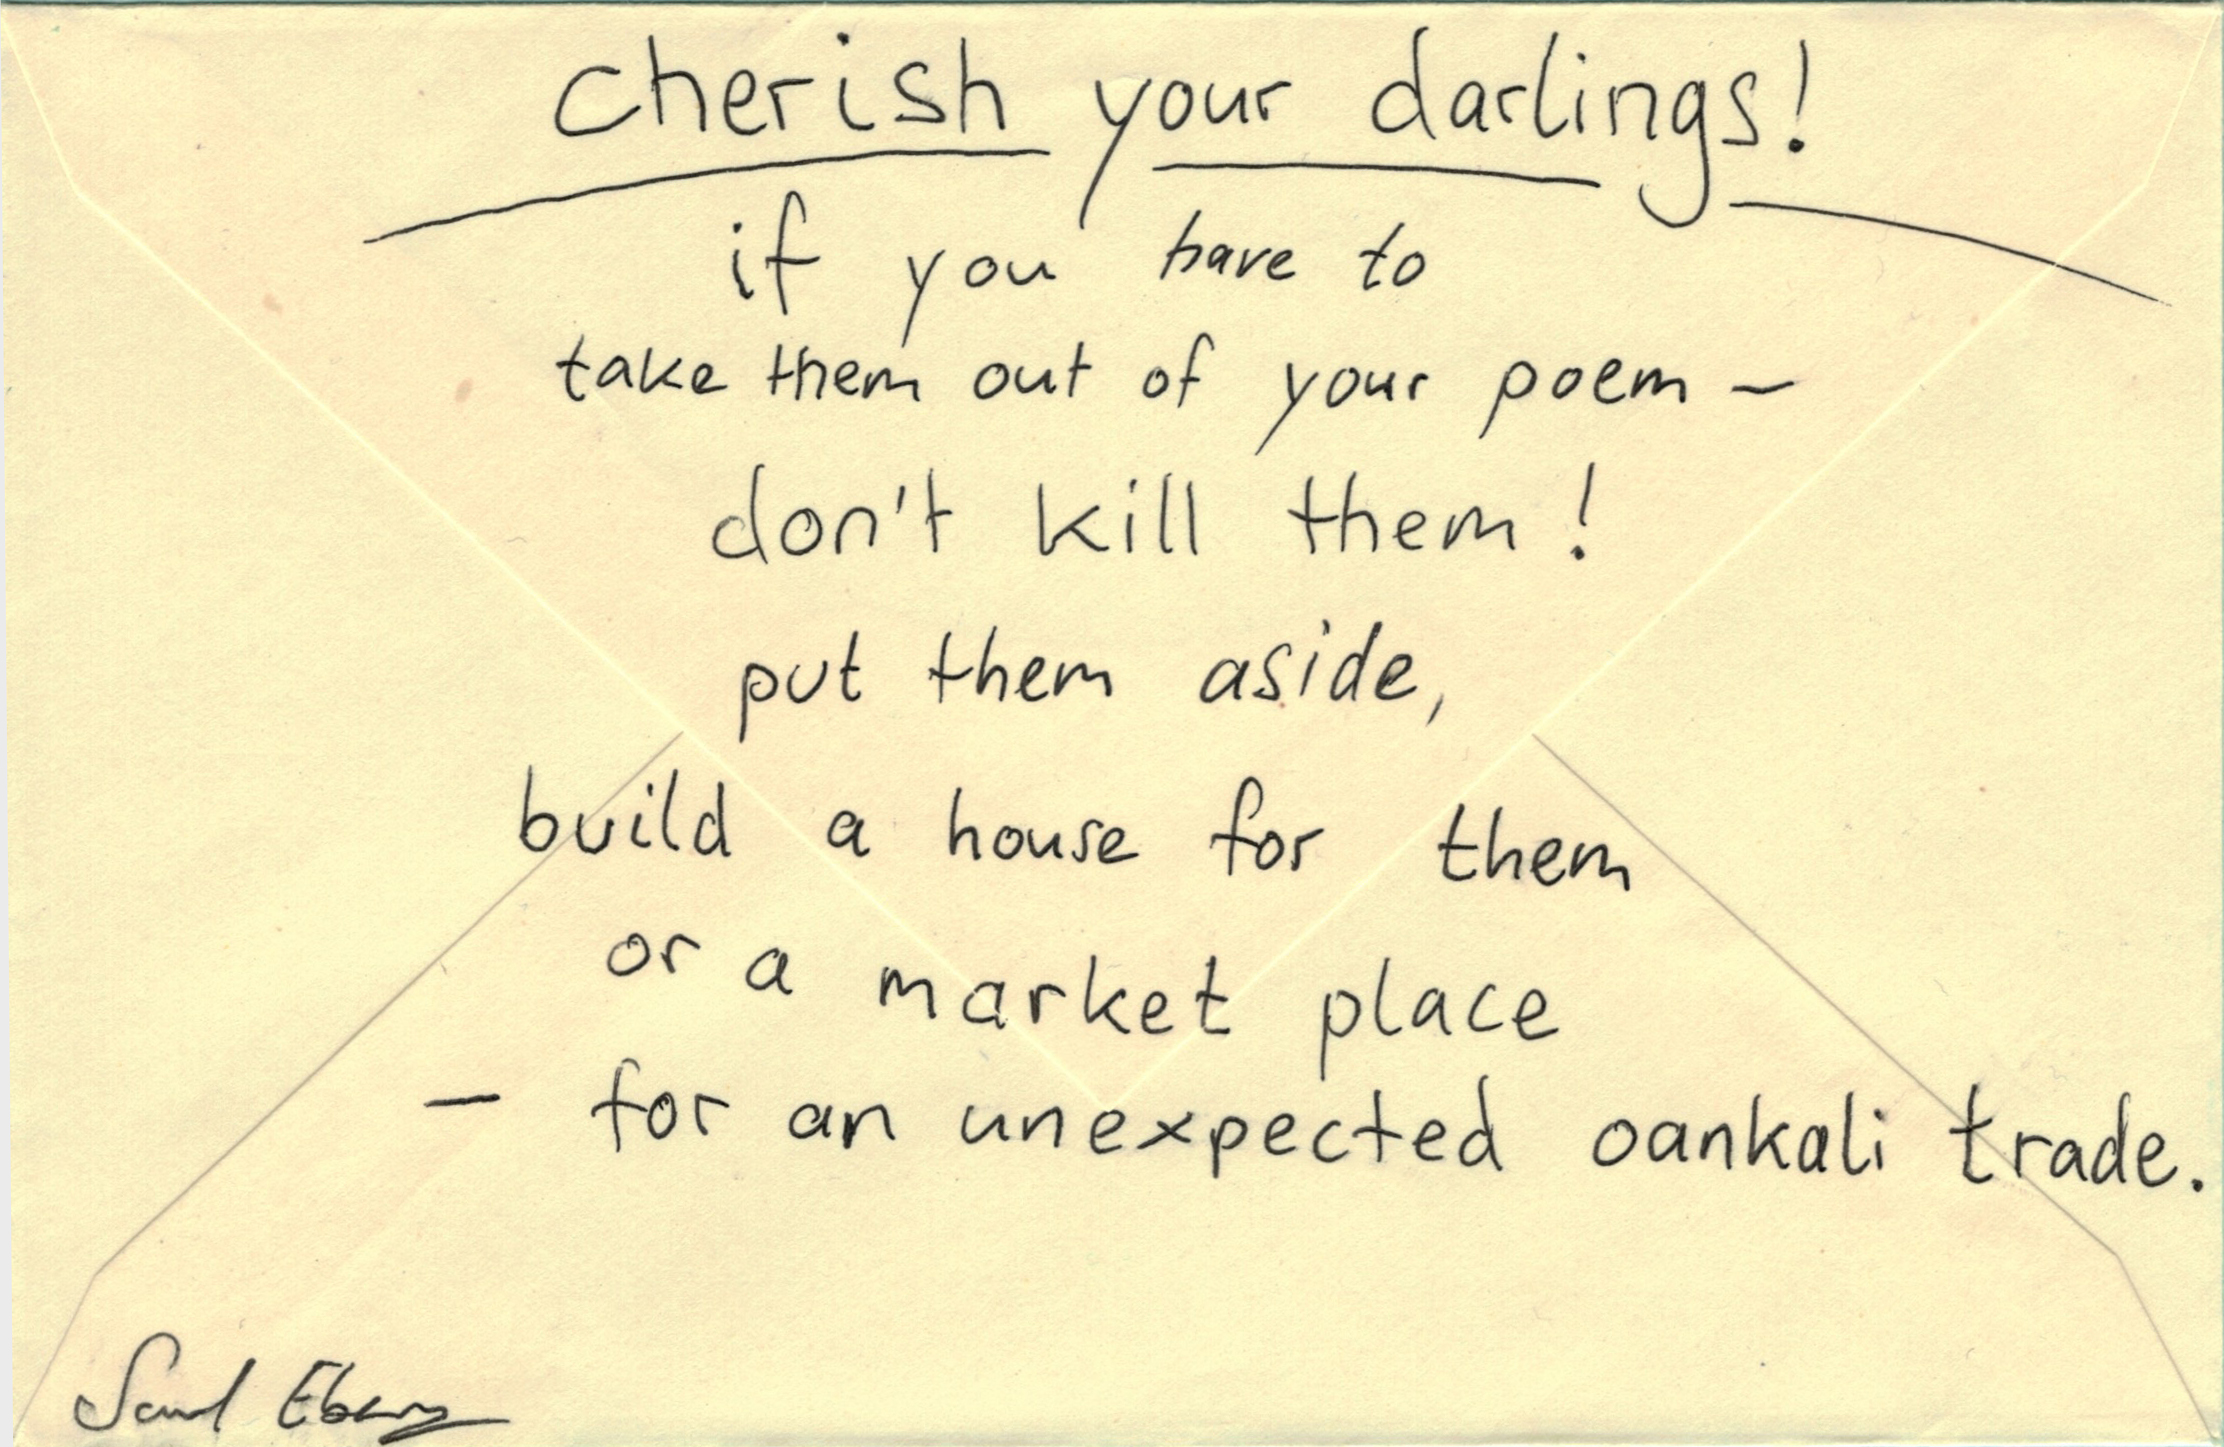 cherish-your-darlings